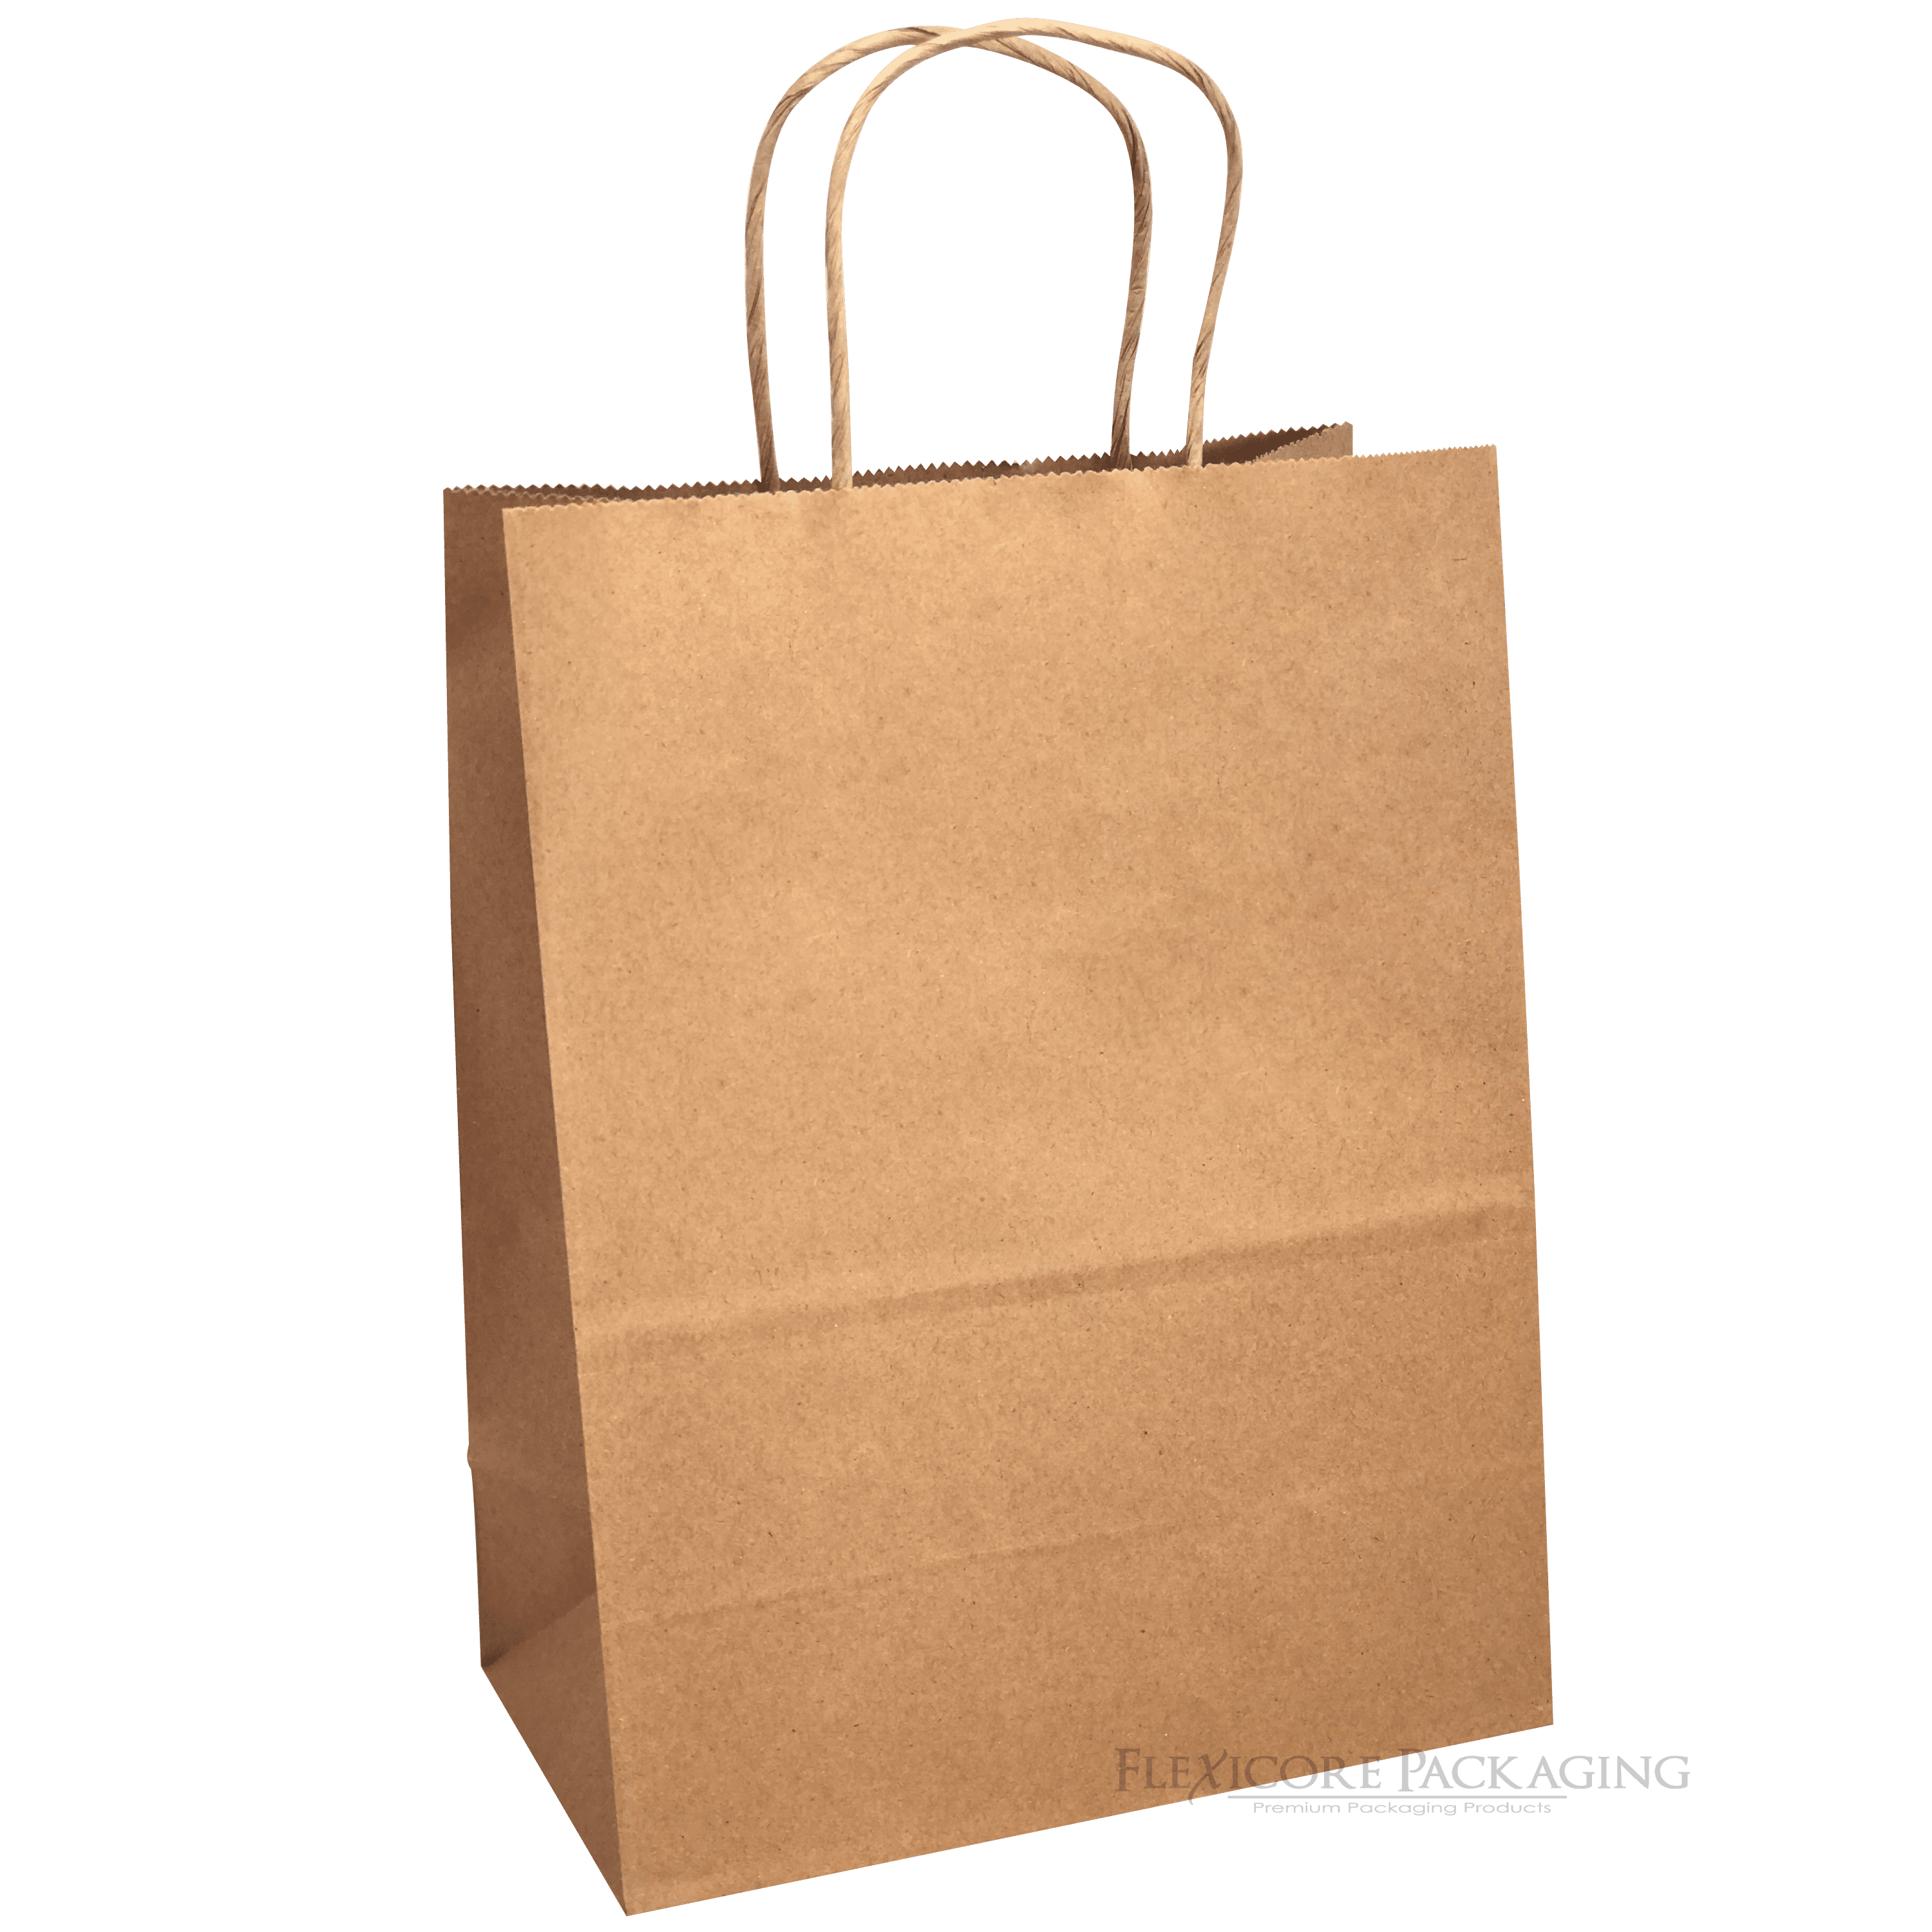 5 x Light Blue Paper Party Gift Bags ~ Boutique Shop Loot Carrier Bag SIZE A4 